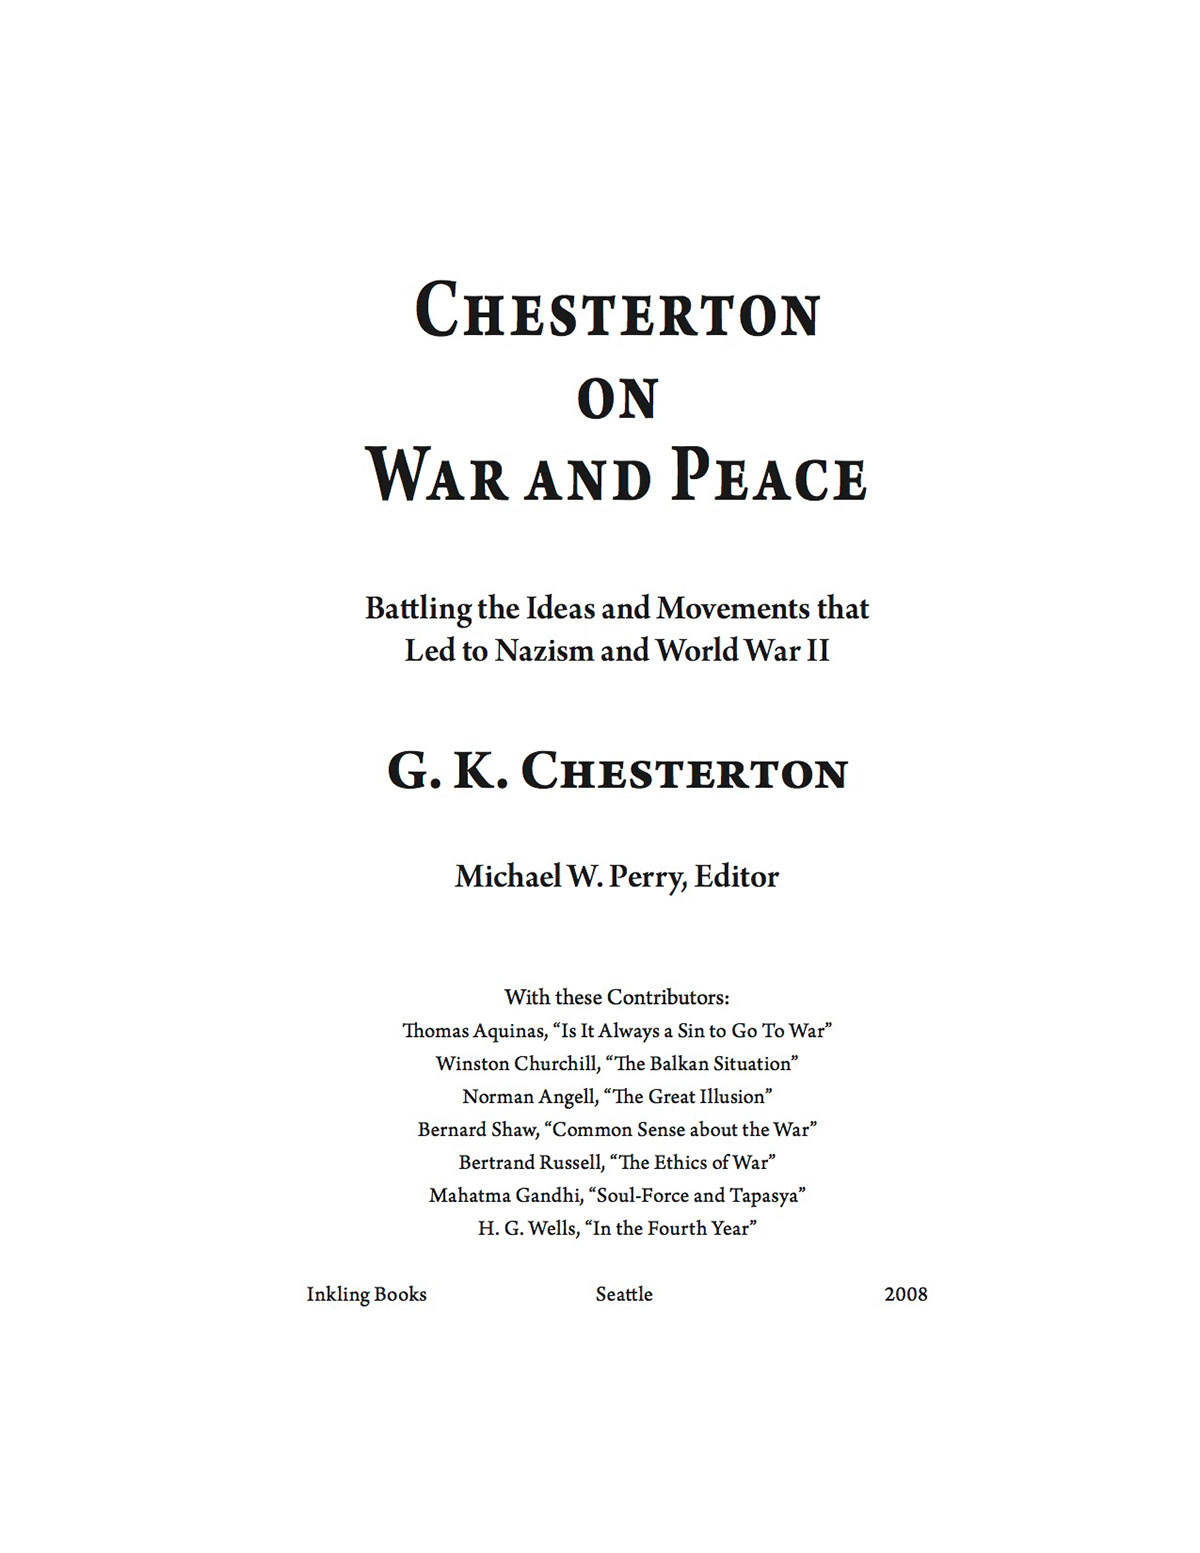 War peace g k chesterton GKC militarism pacifism internationalism nationalism Nobel Prize